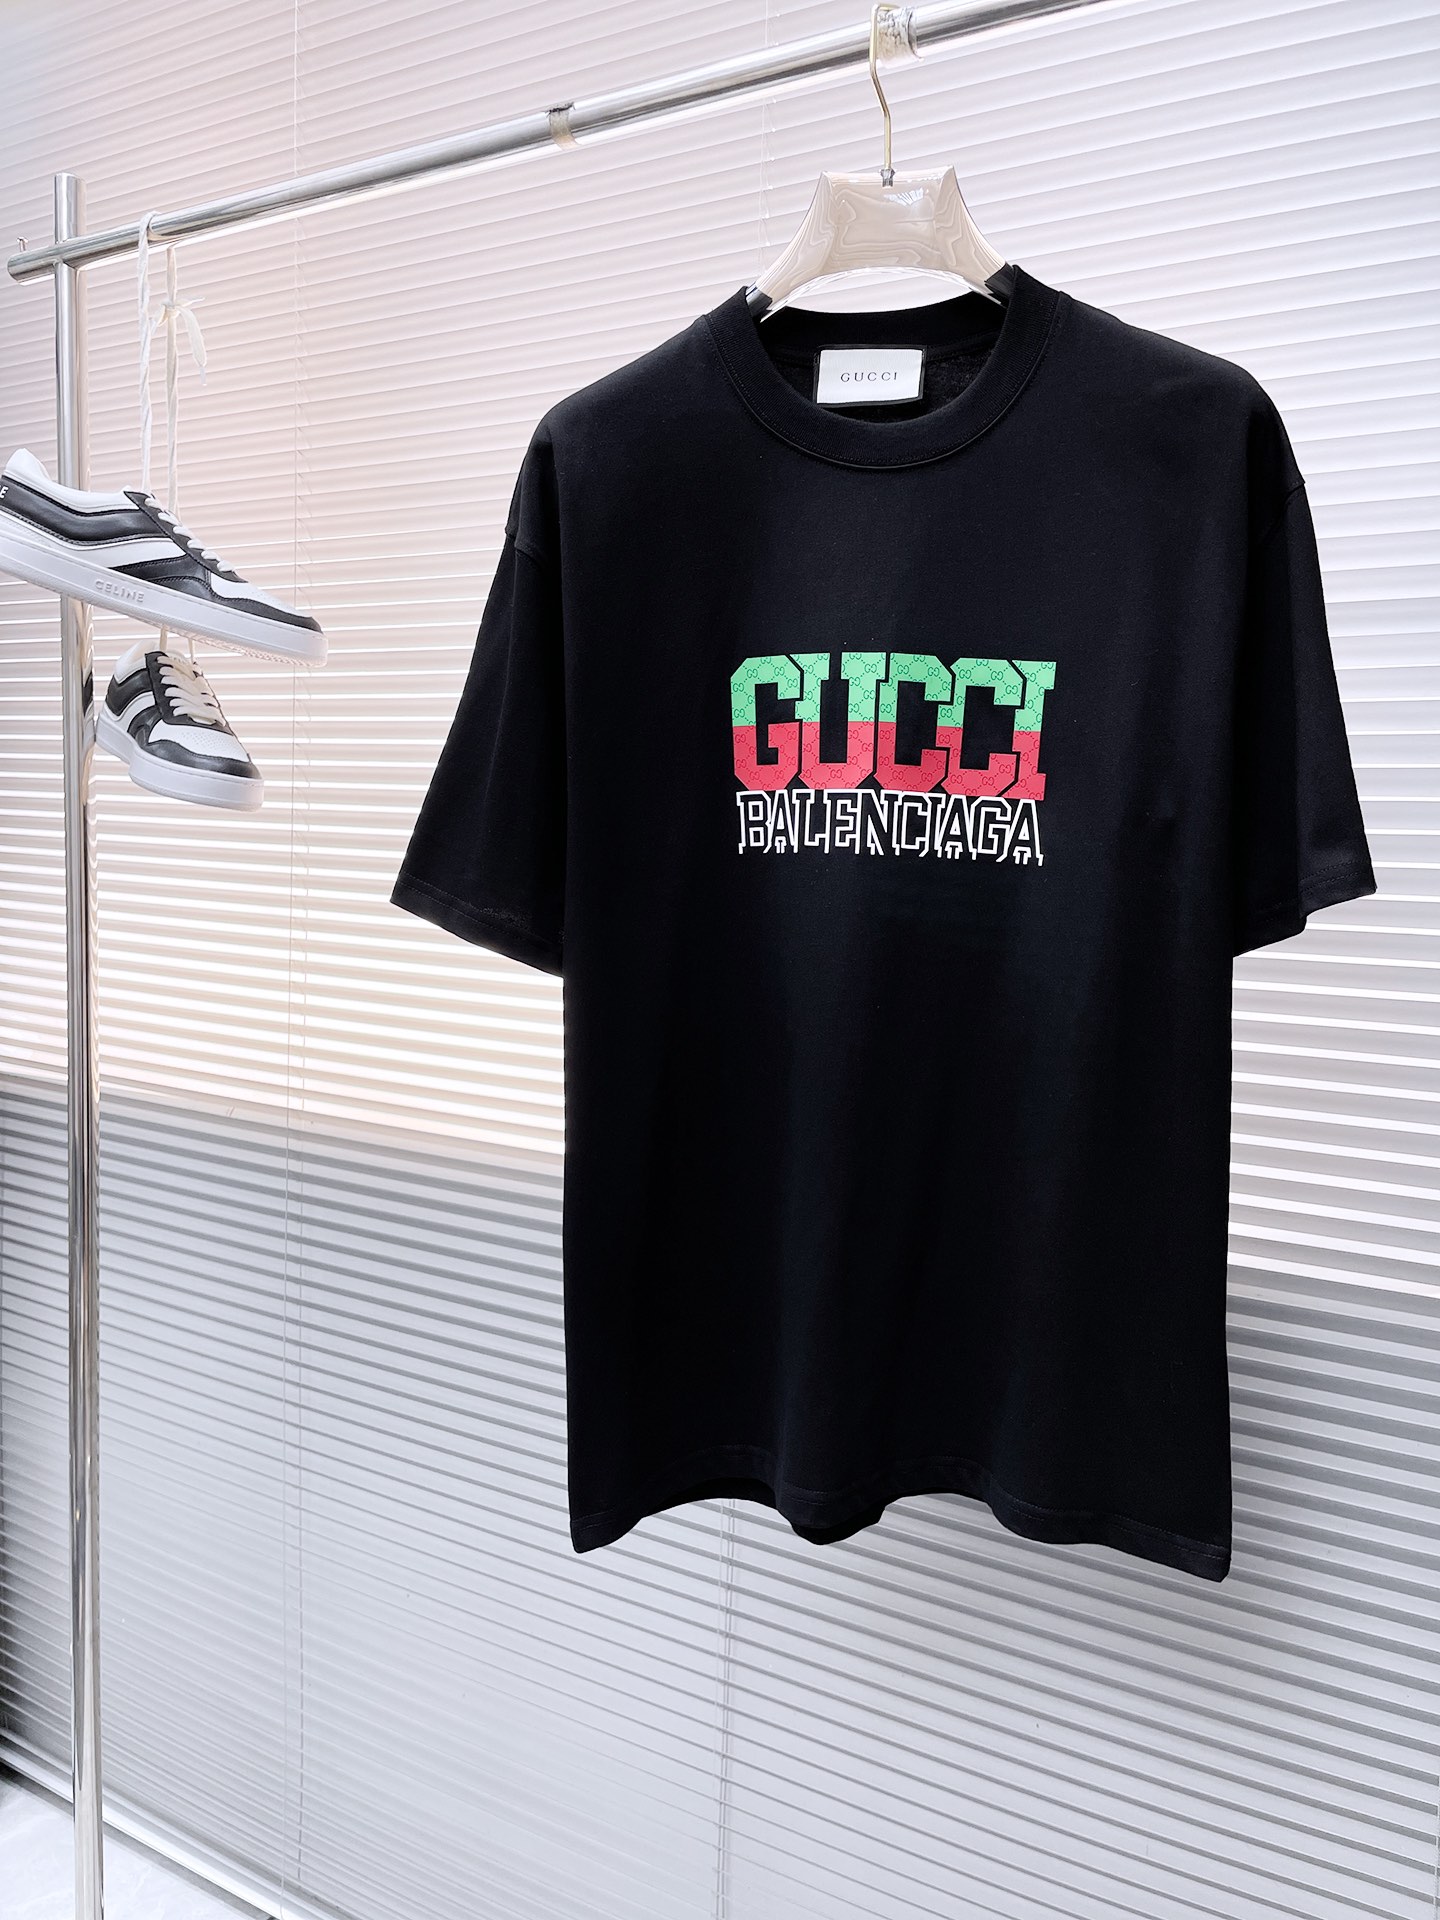 Gucci Clothing T-Shirt Black White Printing Cotton Fashion Short Sleeve